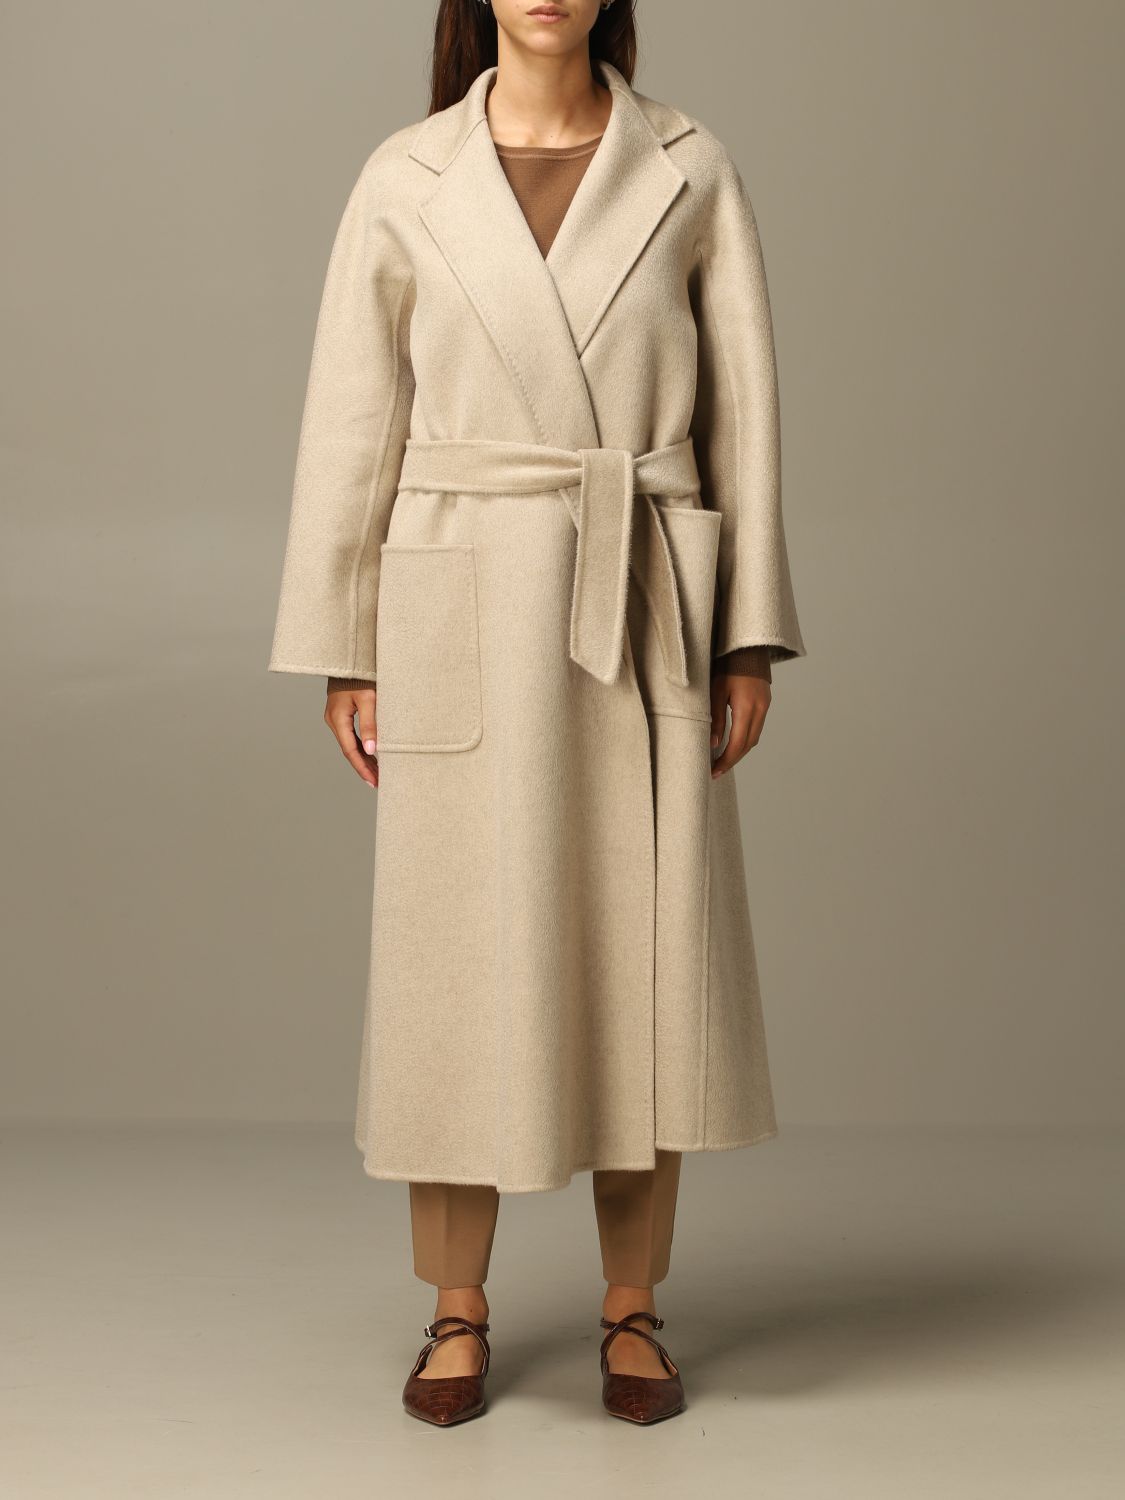 MAX MARA: Labbro coat in zibellined cashmere - Beige | Max Mara coat ...